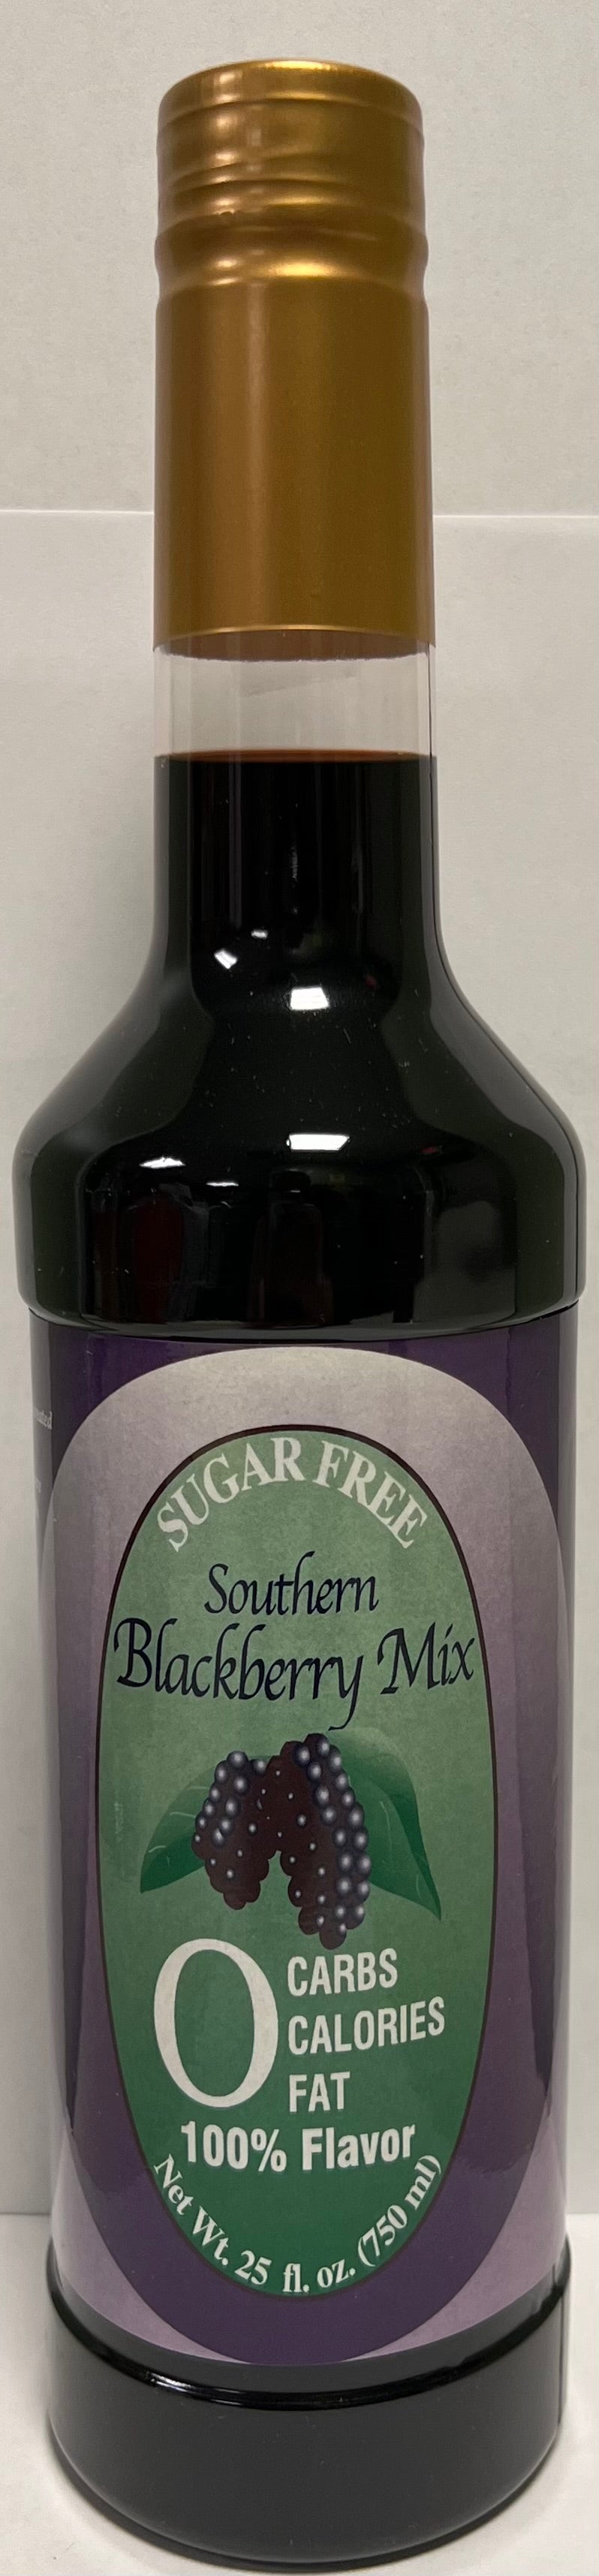 Sugar Free Savannah Blackberry Flavoring Mix